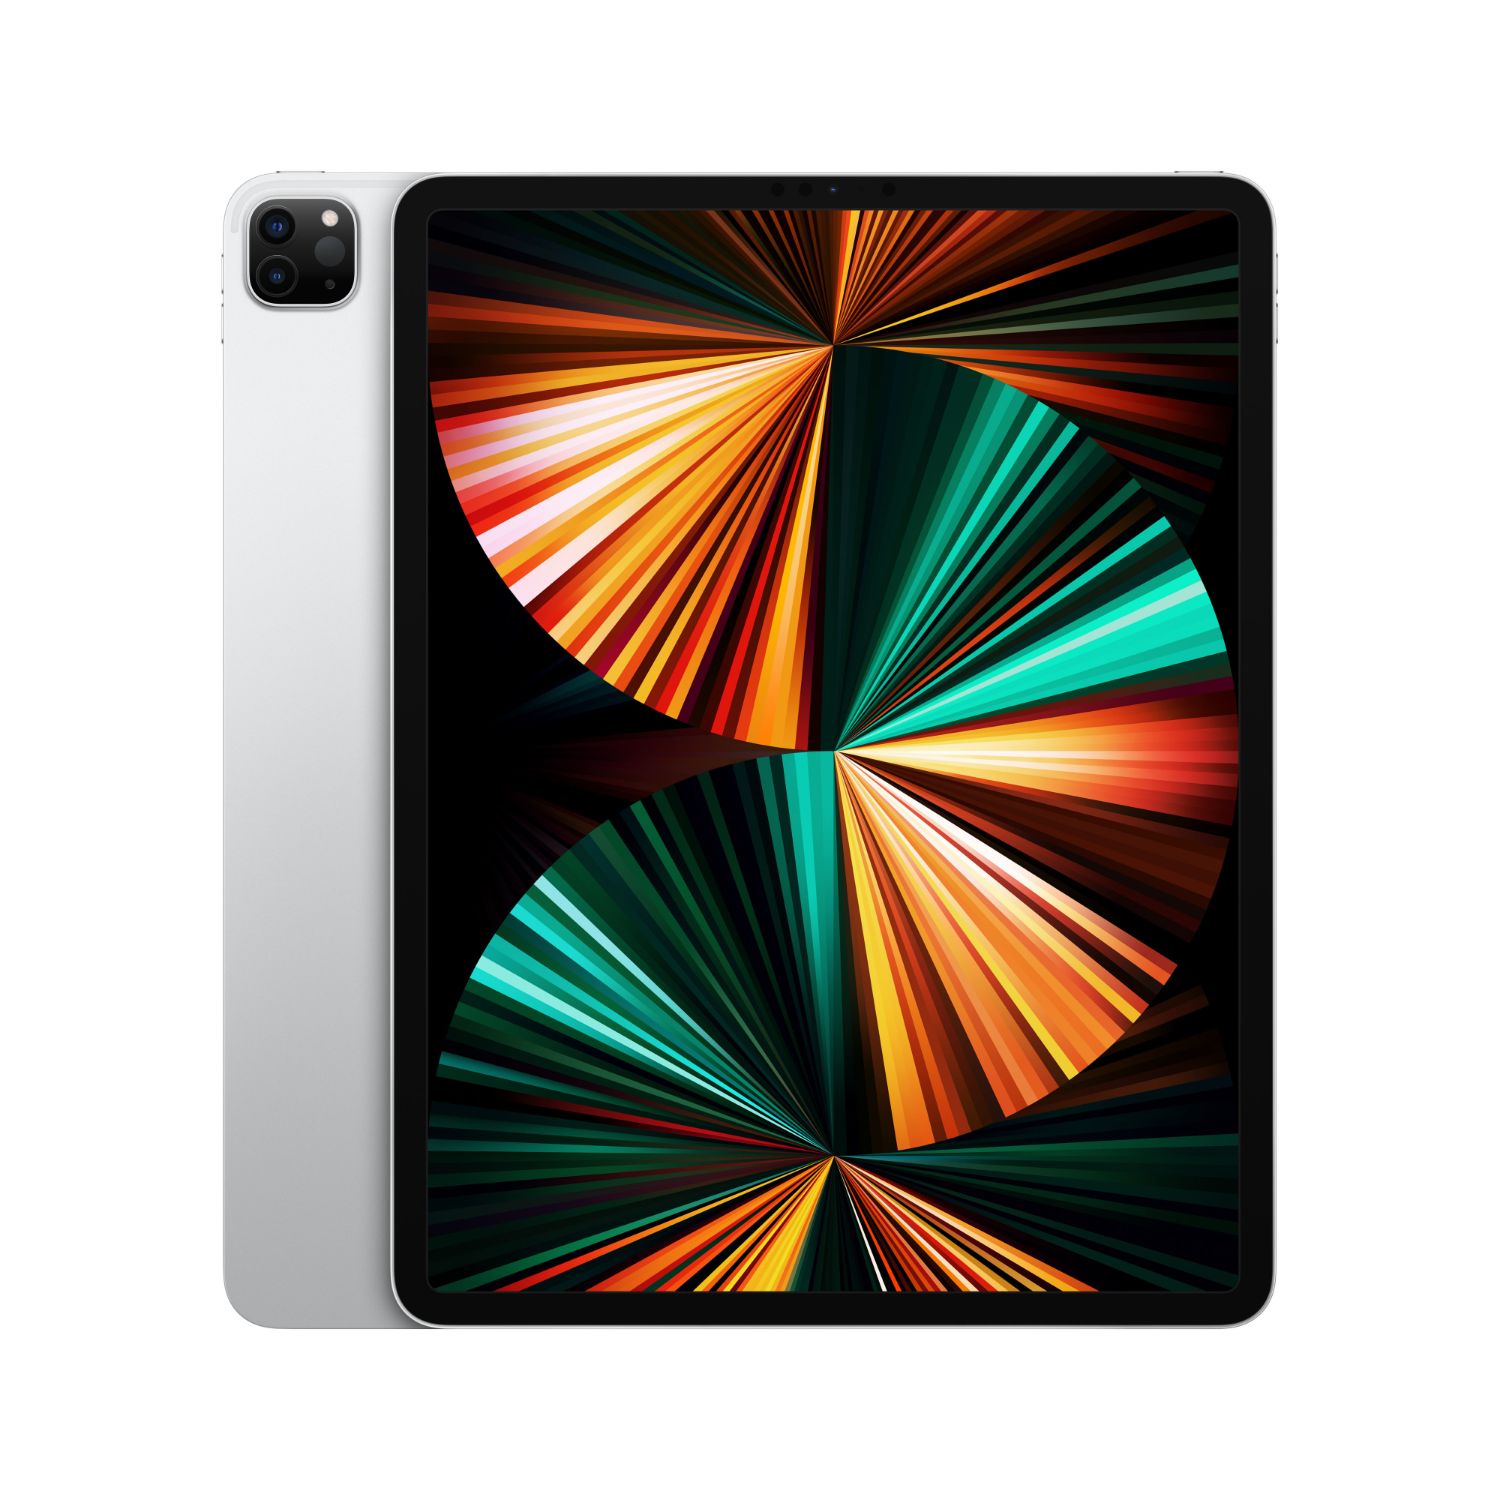 MHNJ3TY/A - Apple iPad Pro 12.9